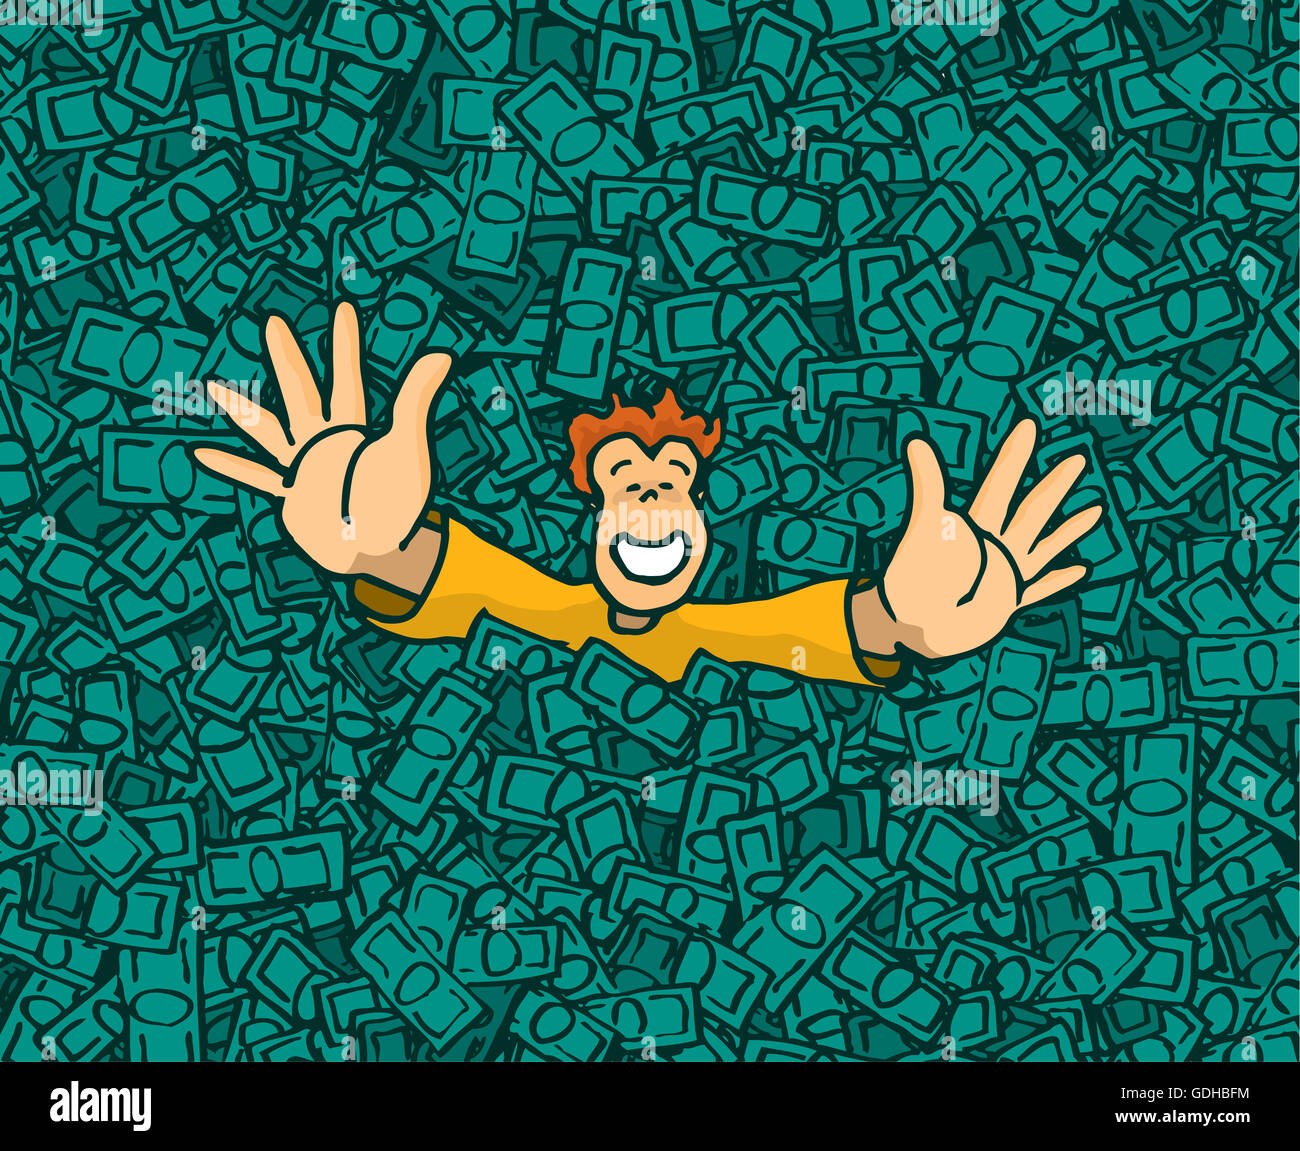 Cartoon illustration of happy rich man raising hands on money pool Stock Photo